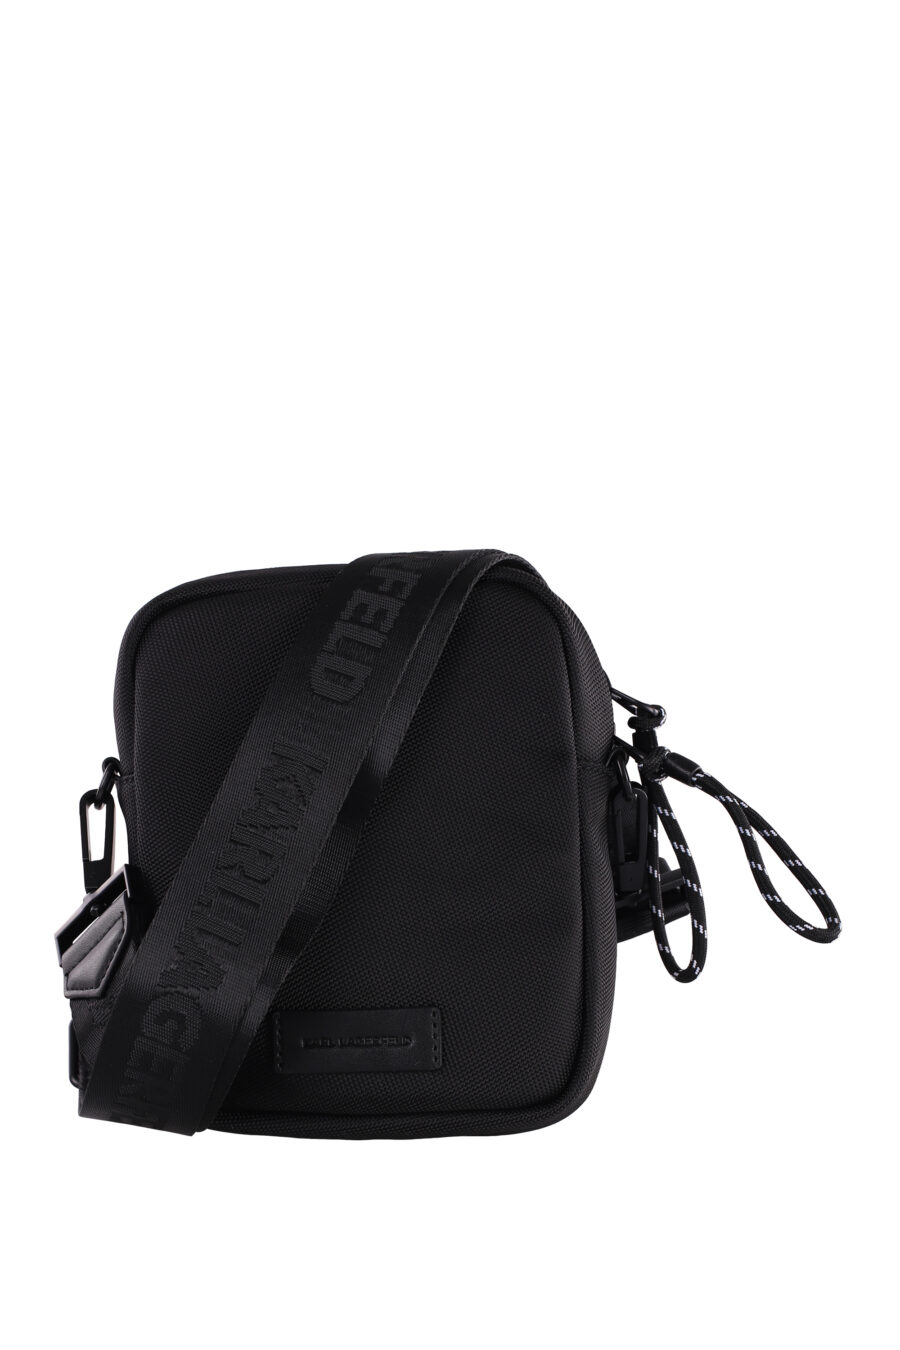 Bolso bandolera negro con logo plateado - IMG 6062